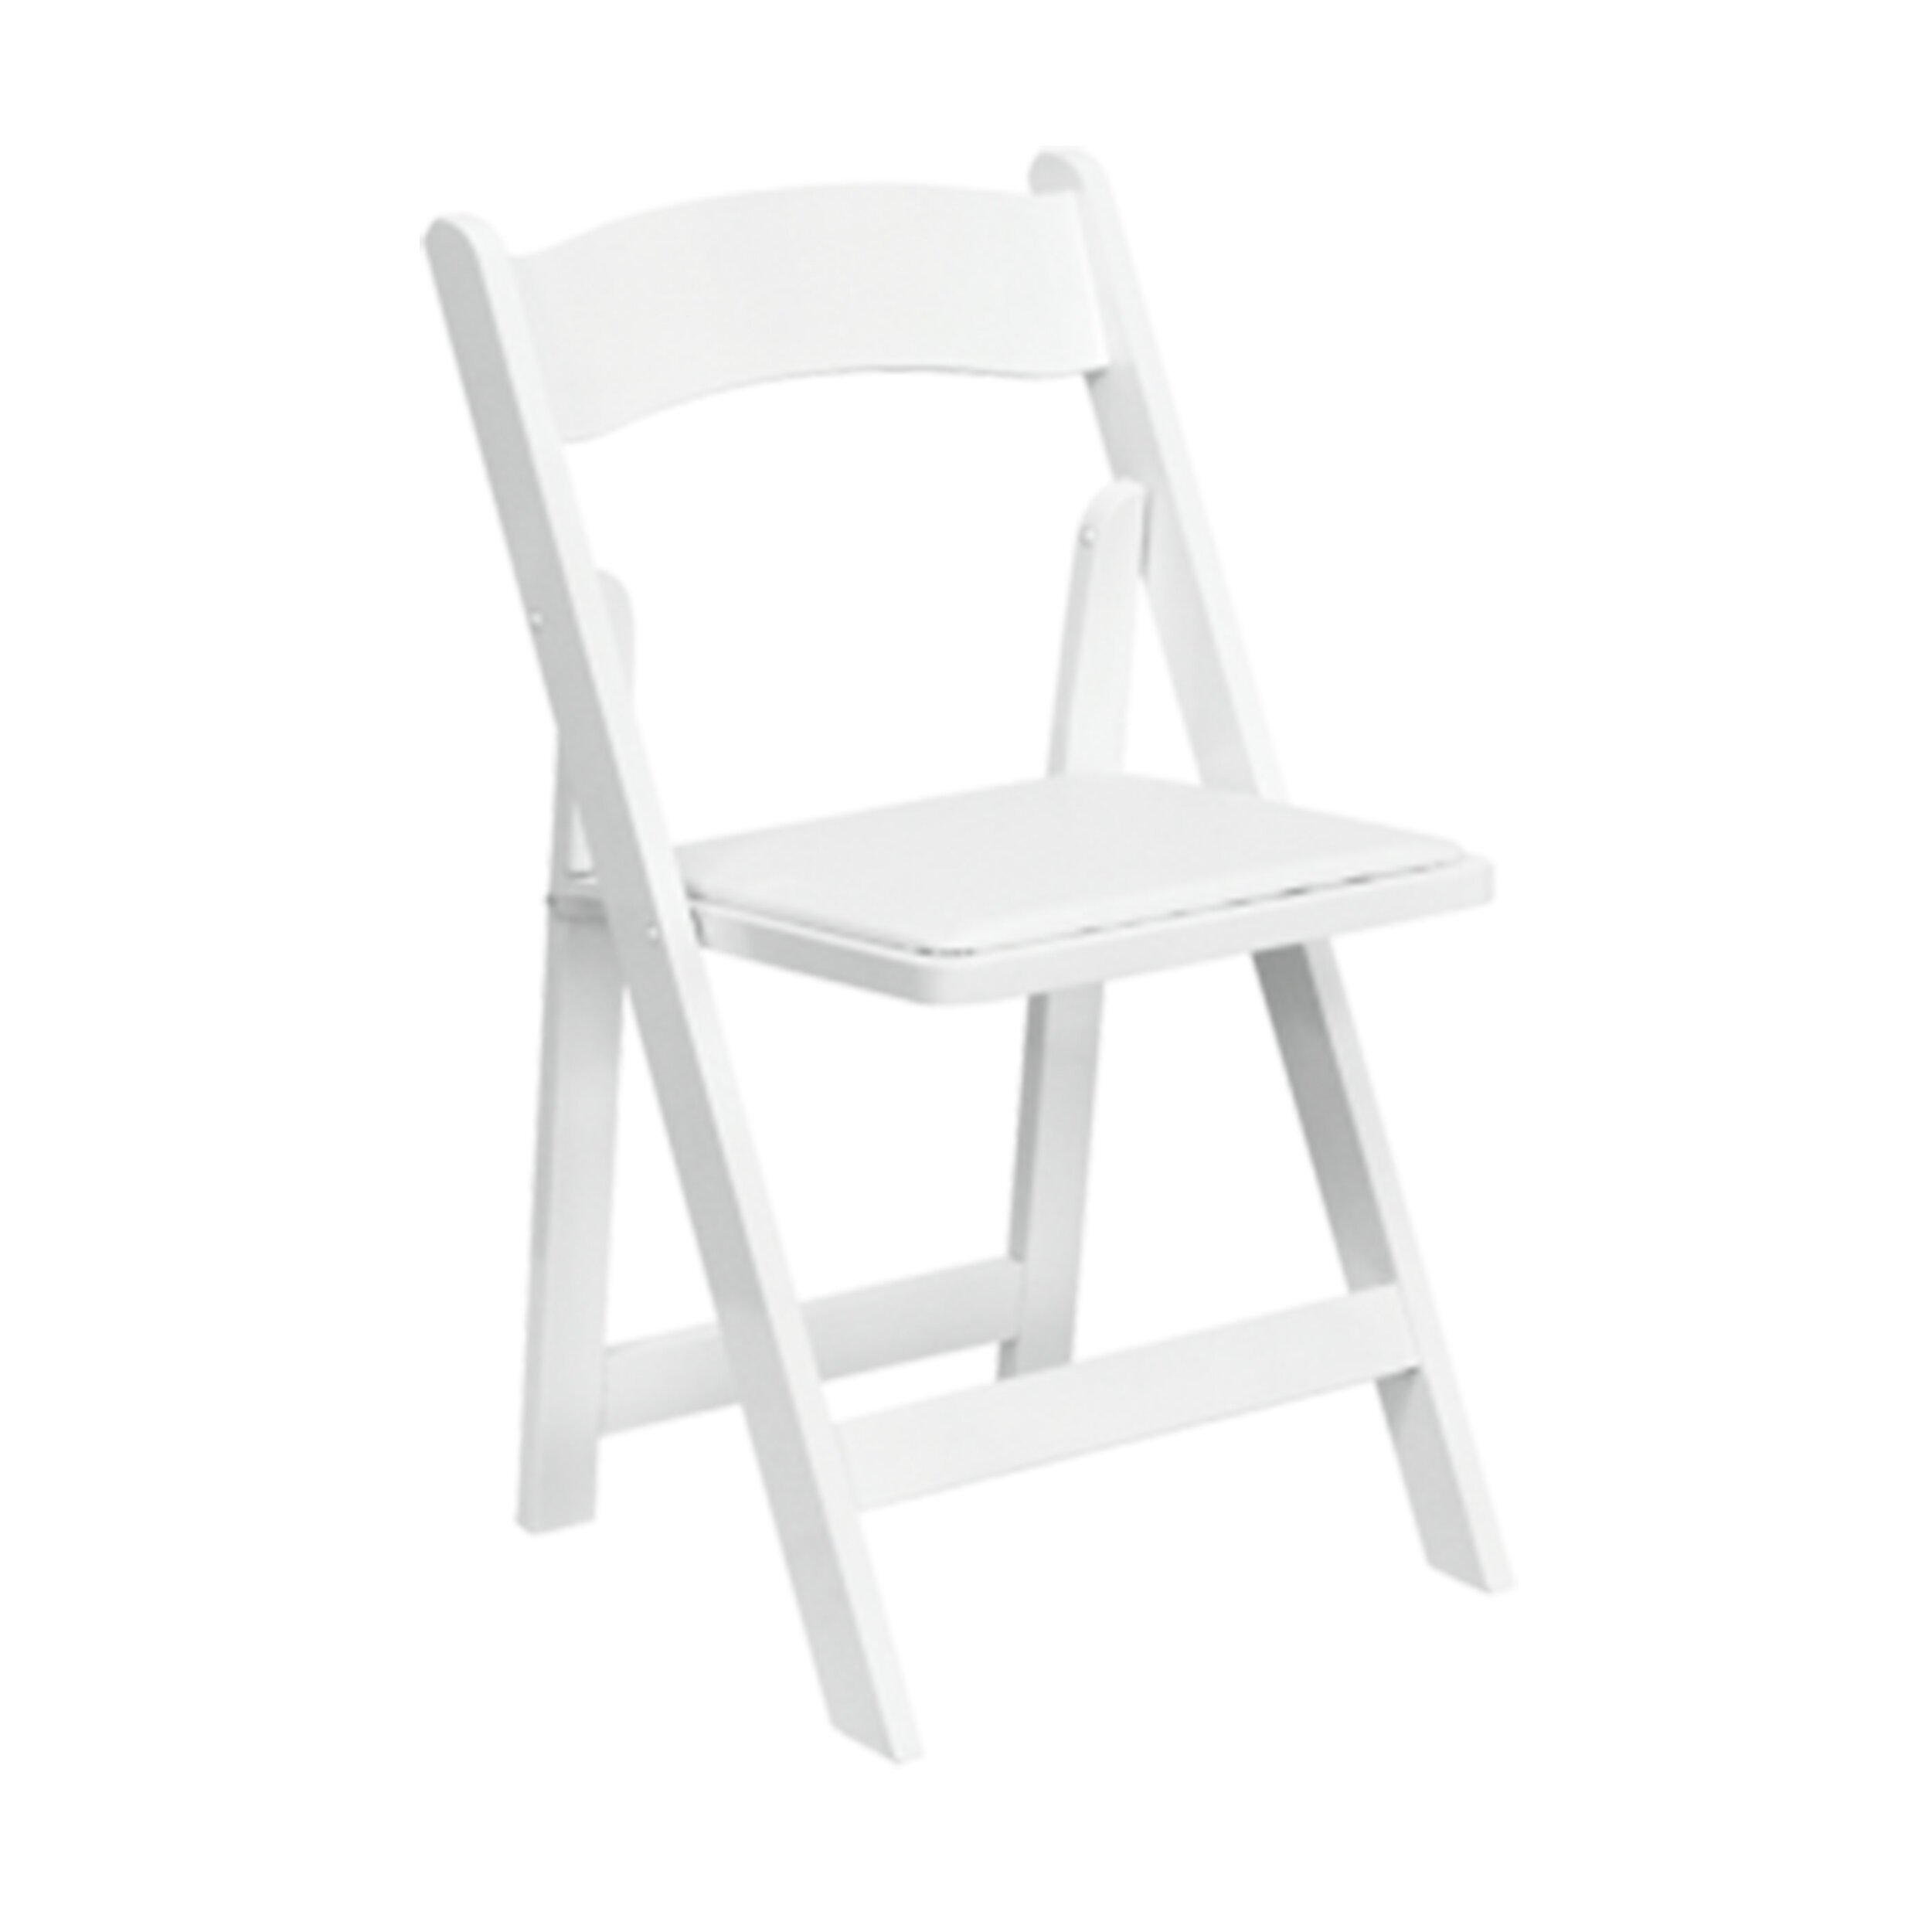 resin-chairs.jpg